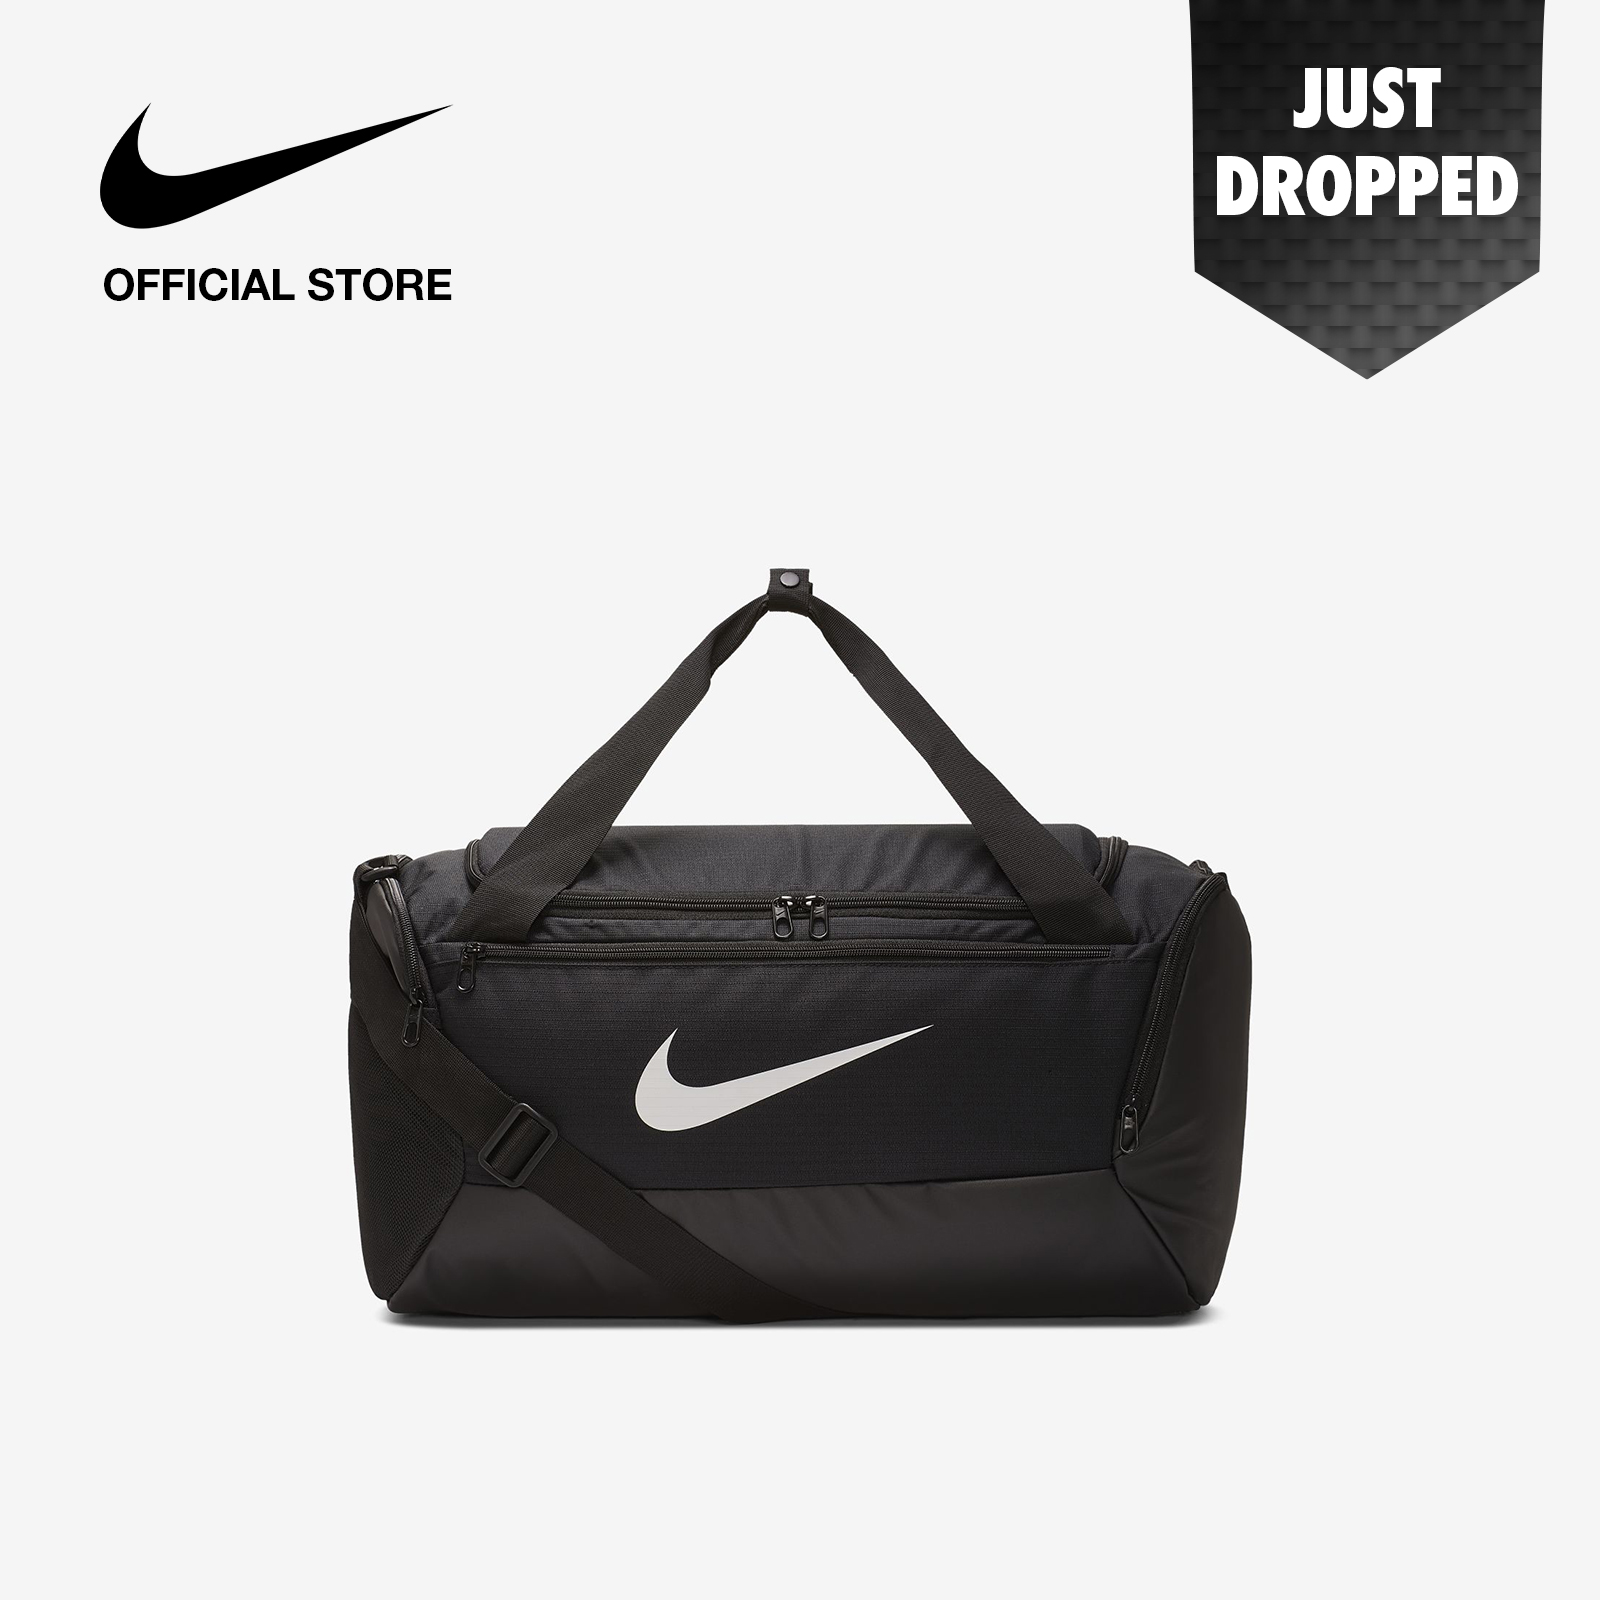 Nike Unisex Brasilia Training Duffel Bag (Small) - Black